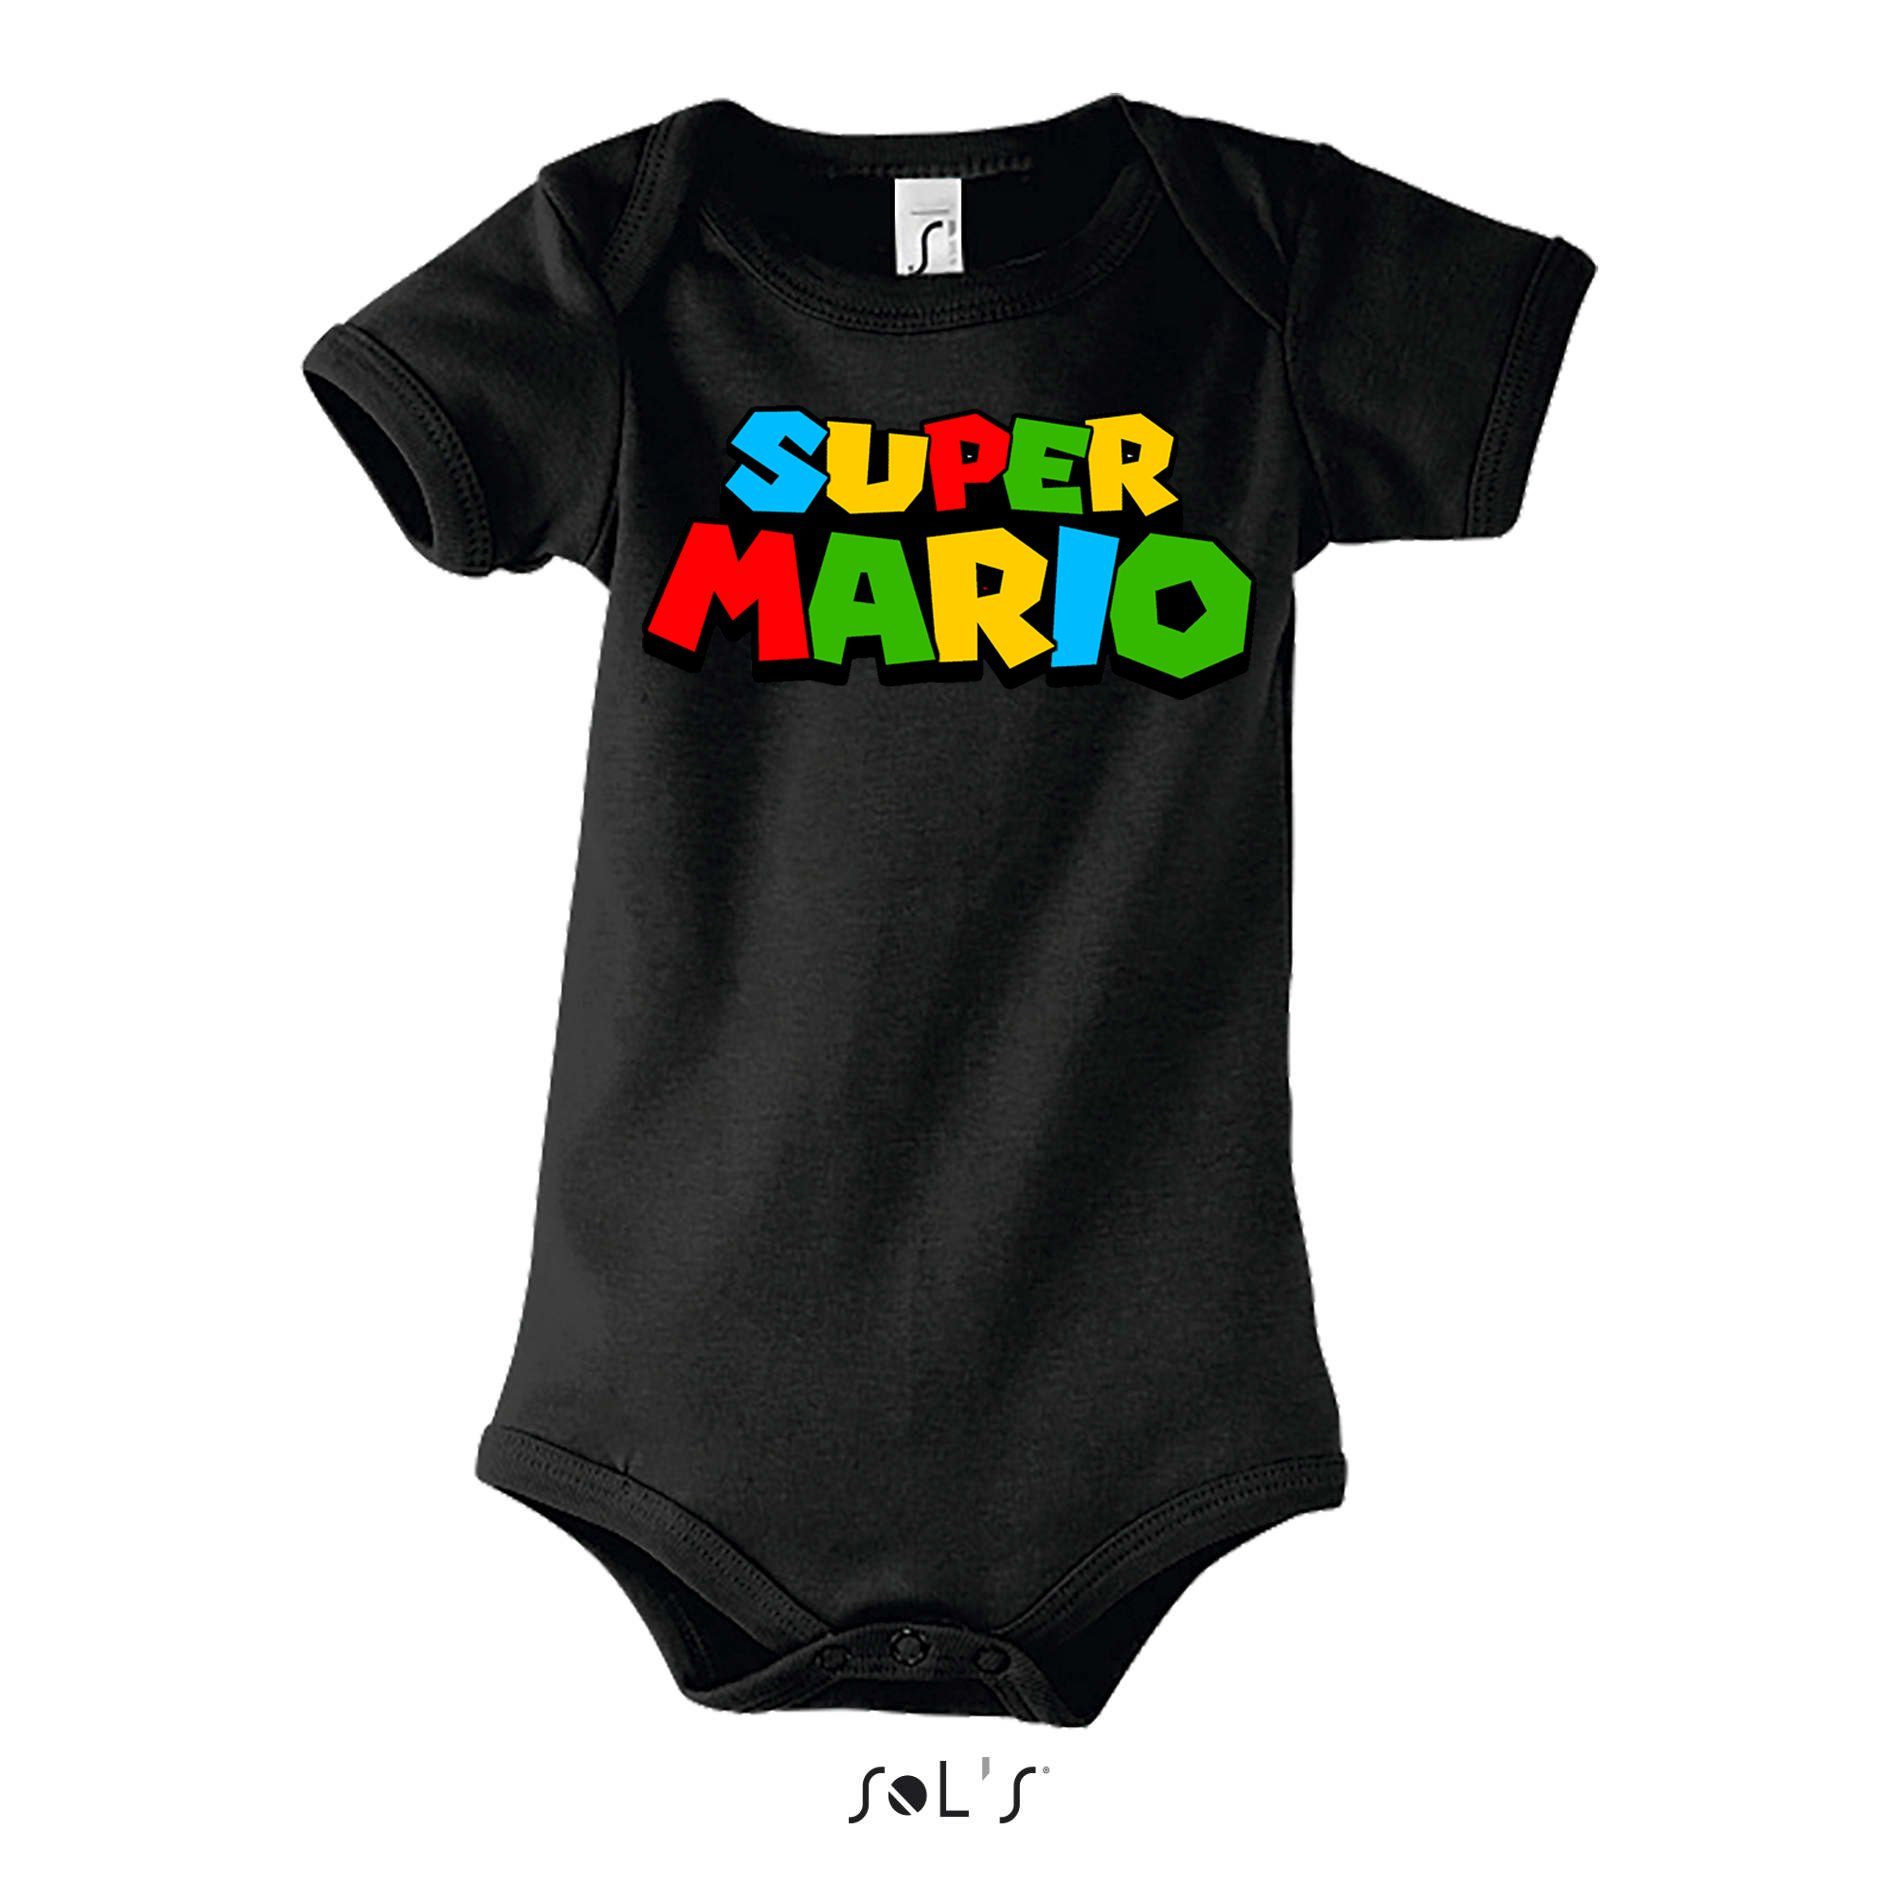 Blondie & Brownie Strampler Kinder Baby Super Mario Nintendo Gamer Gaming Konsole Spiele Schwarz